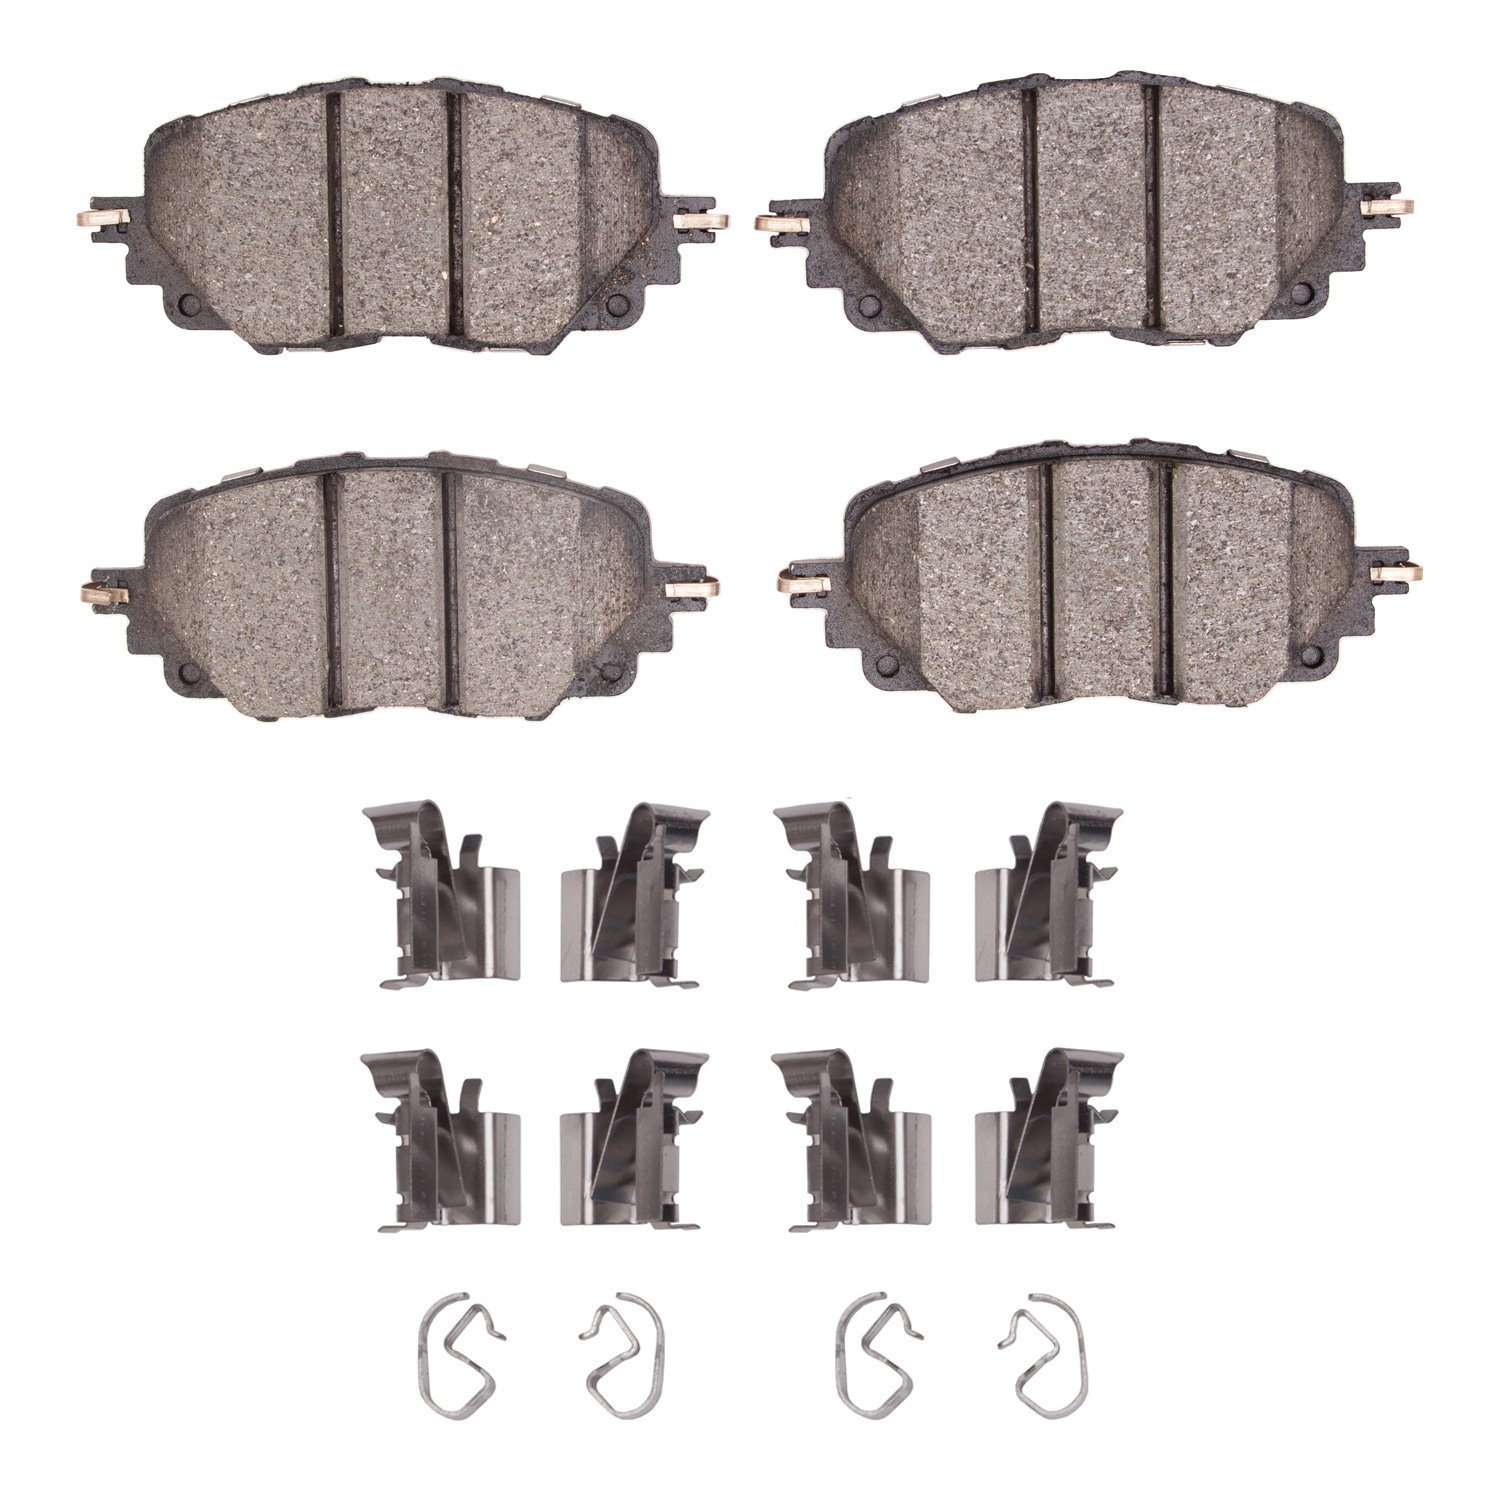 1600-1903-01 5000 Euro Ceramic Brake Pads & Hardware Kit, Fits Select Multiple Makes/Models, Position: Front